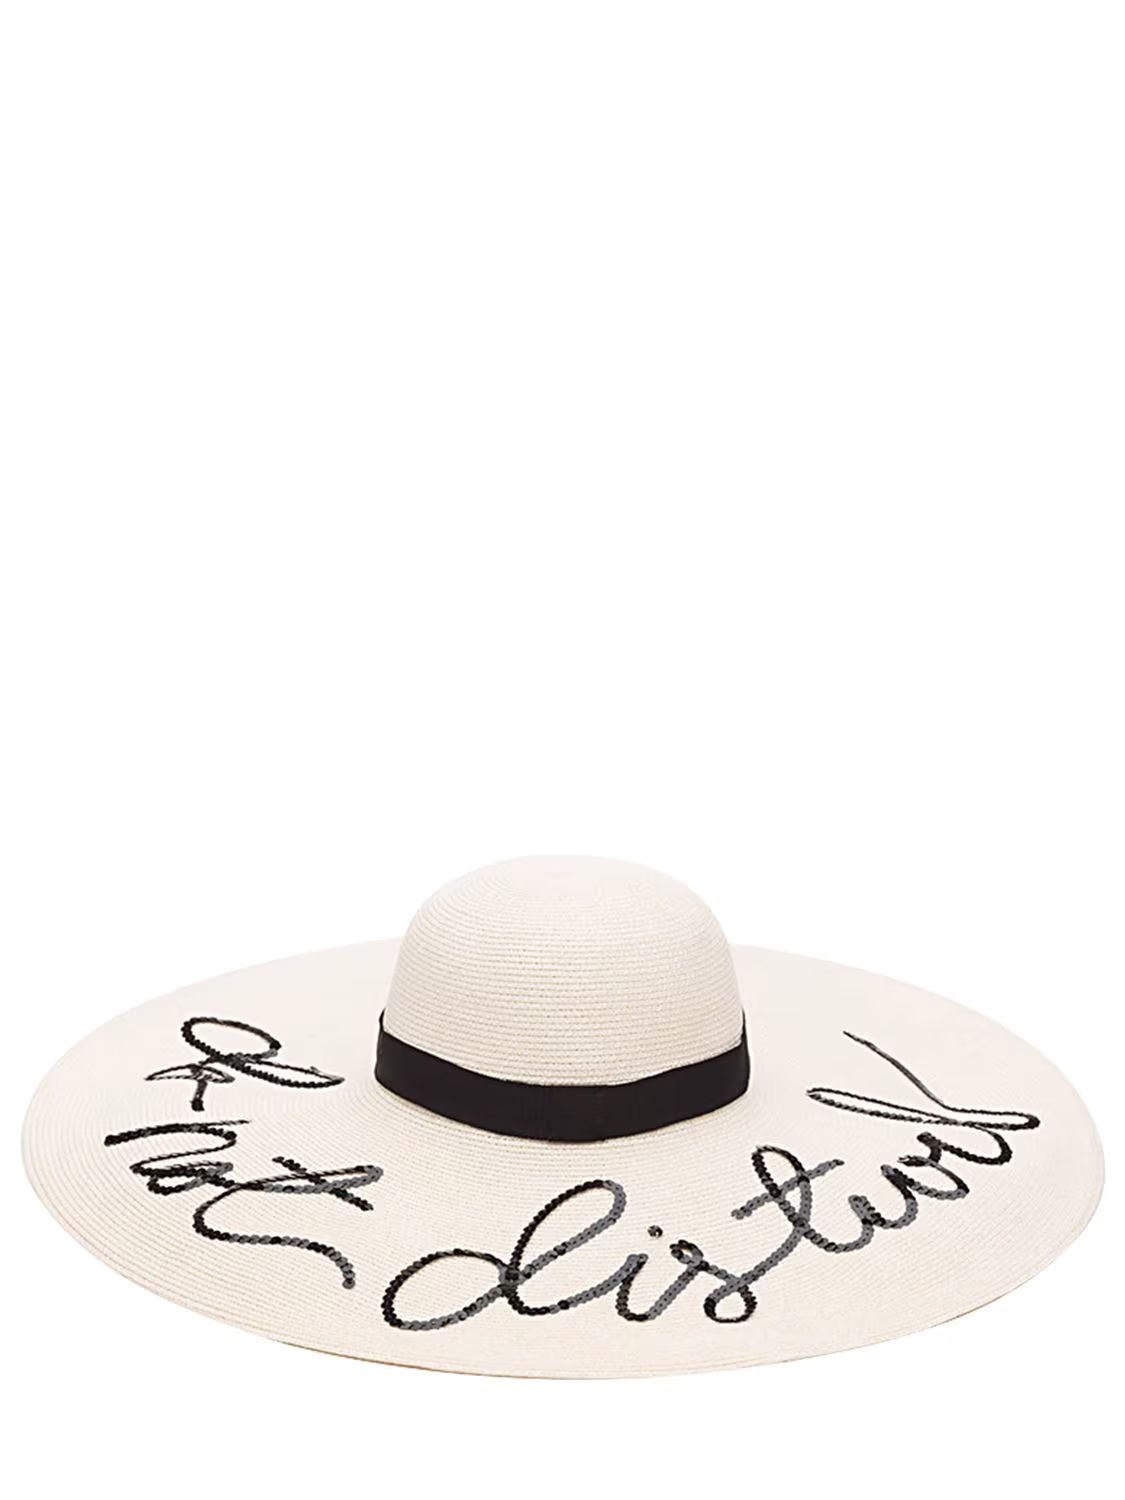 Sunny 'do Not Disturb' Hat | Luisaviaroma